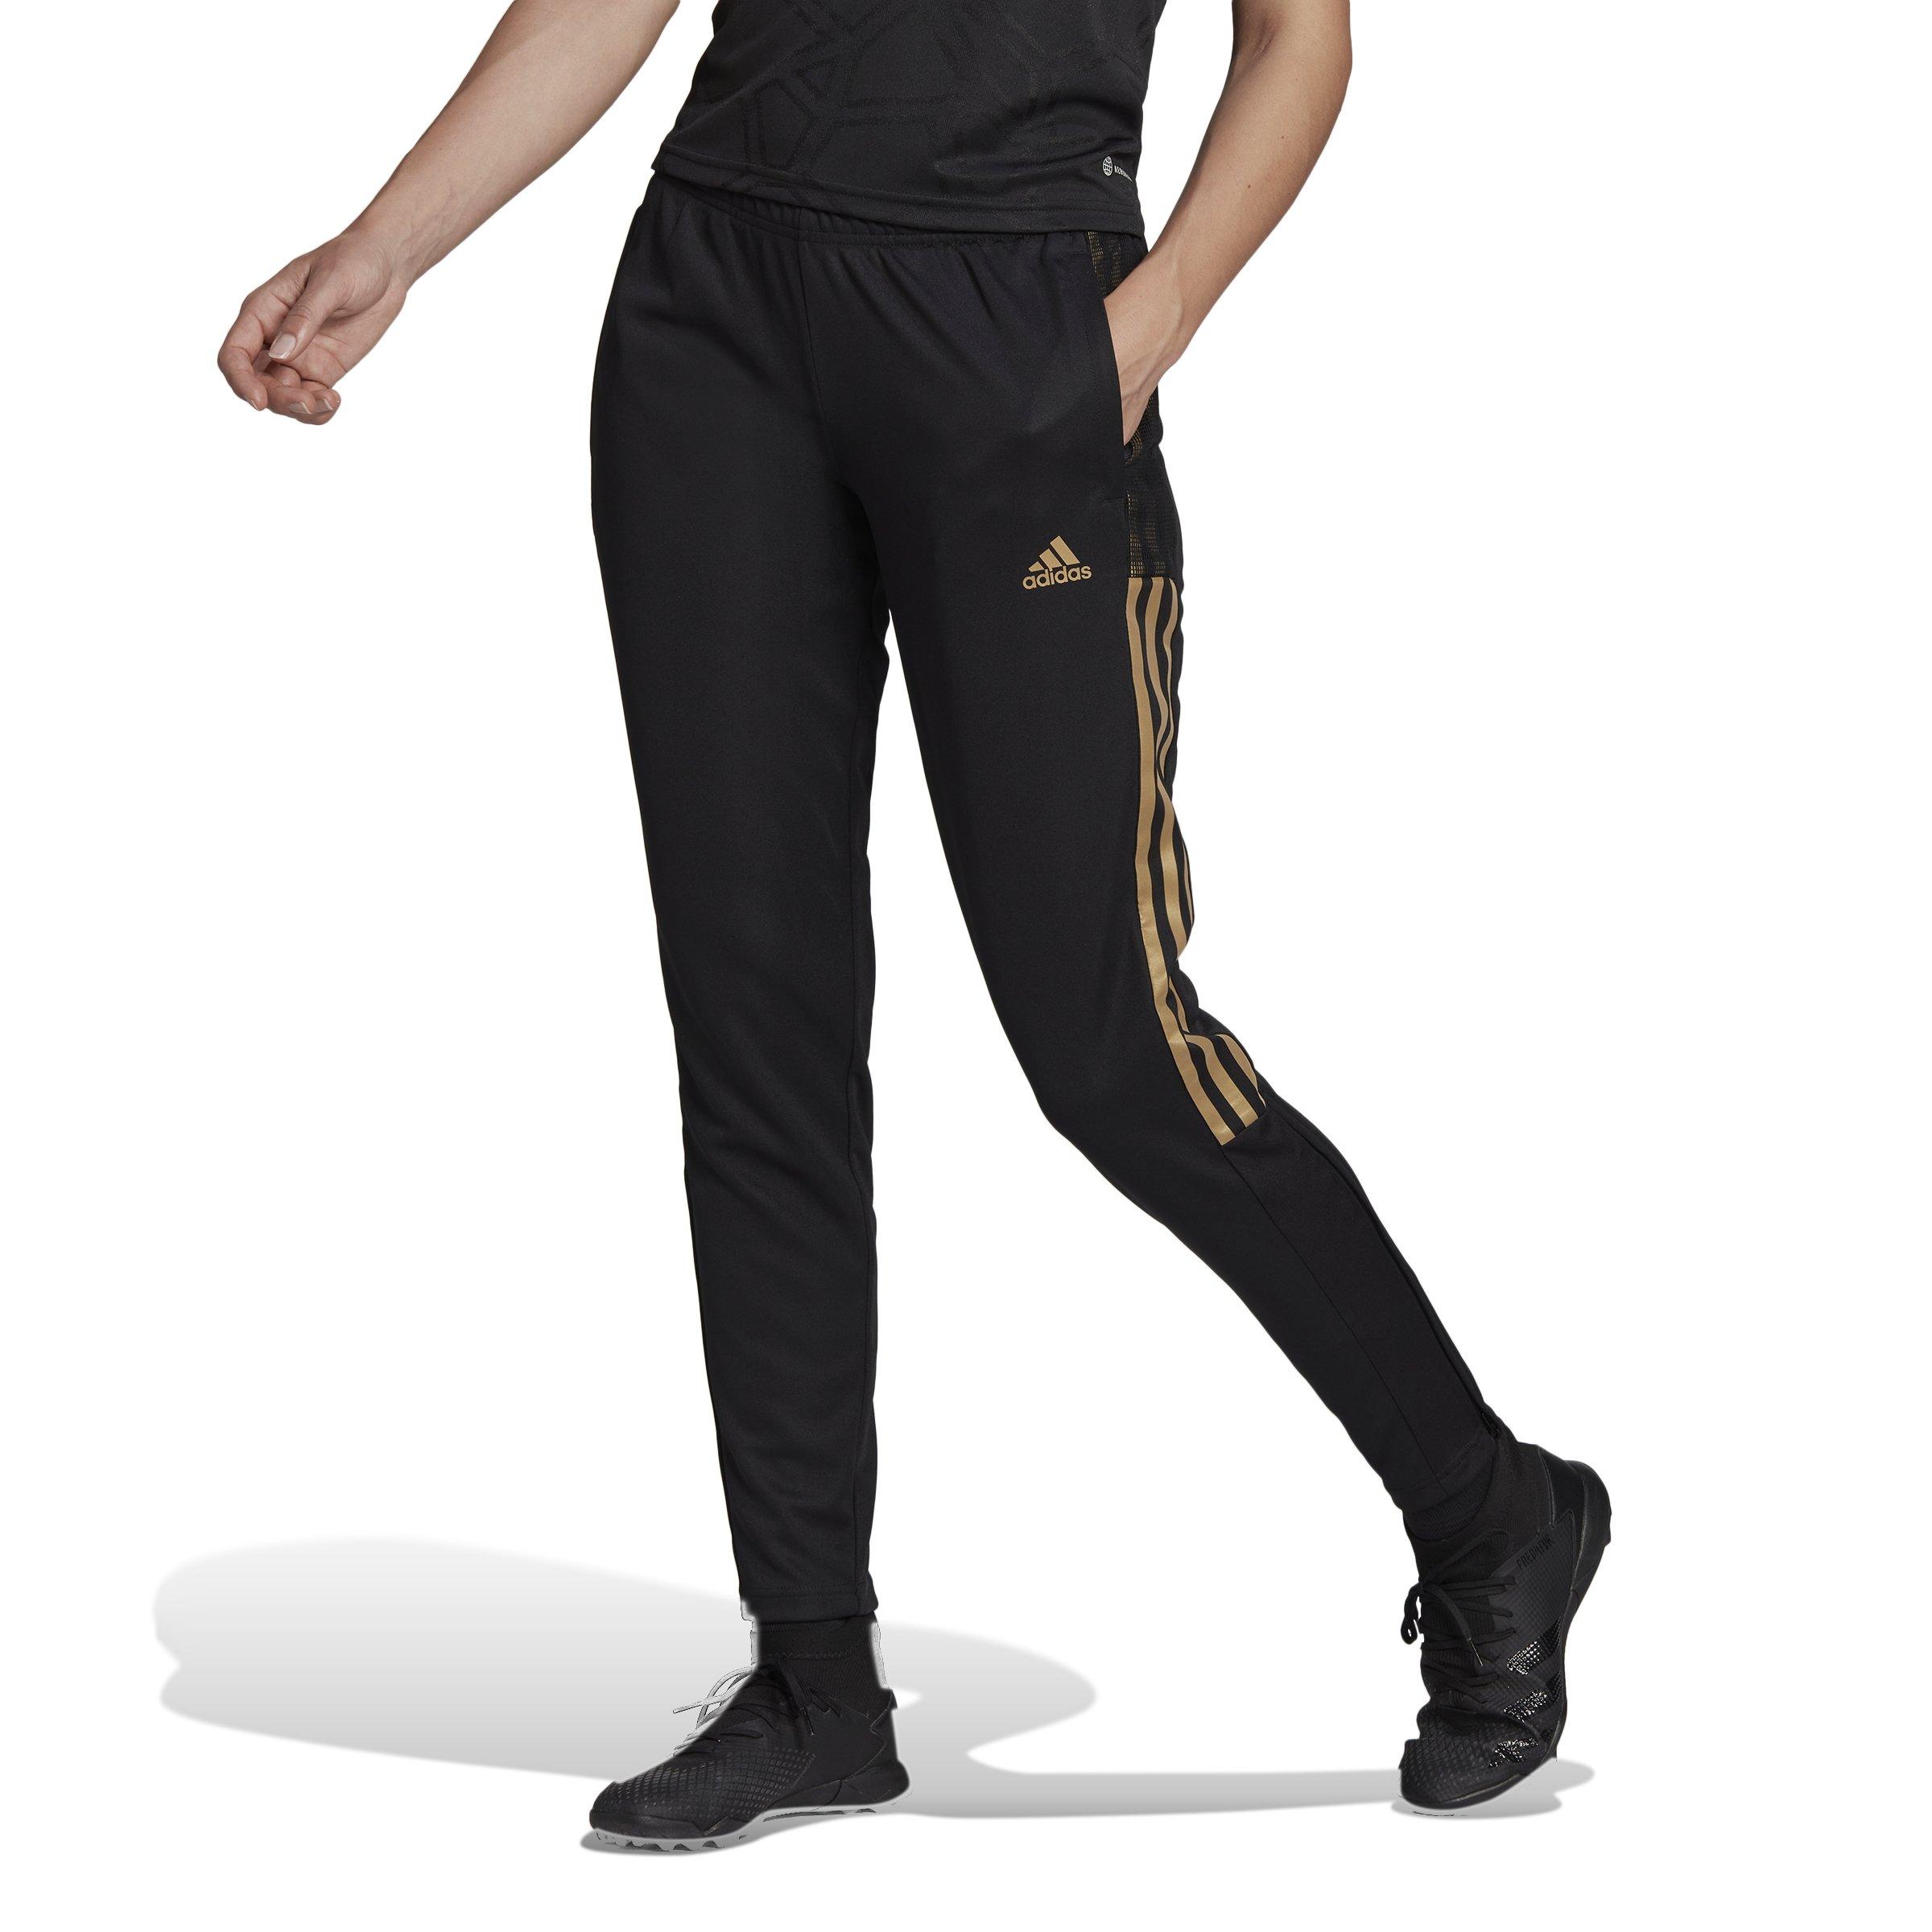 adidas Women's Tiro Pants - Black/Gold